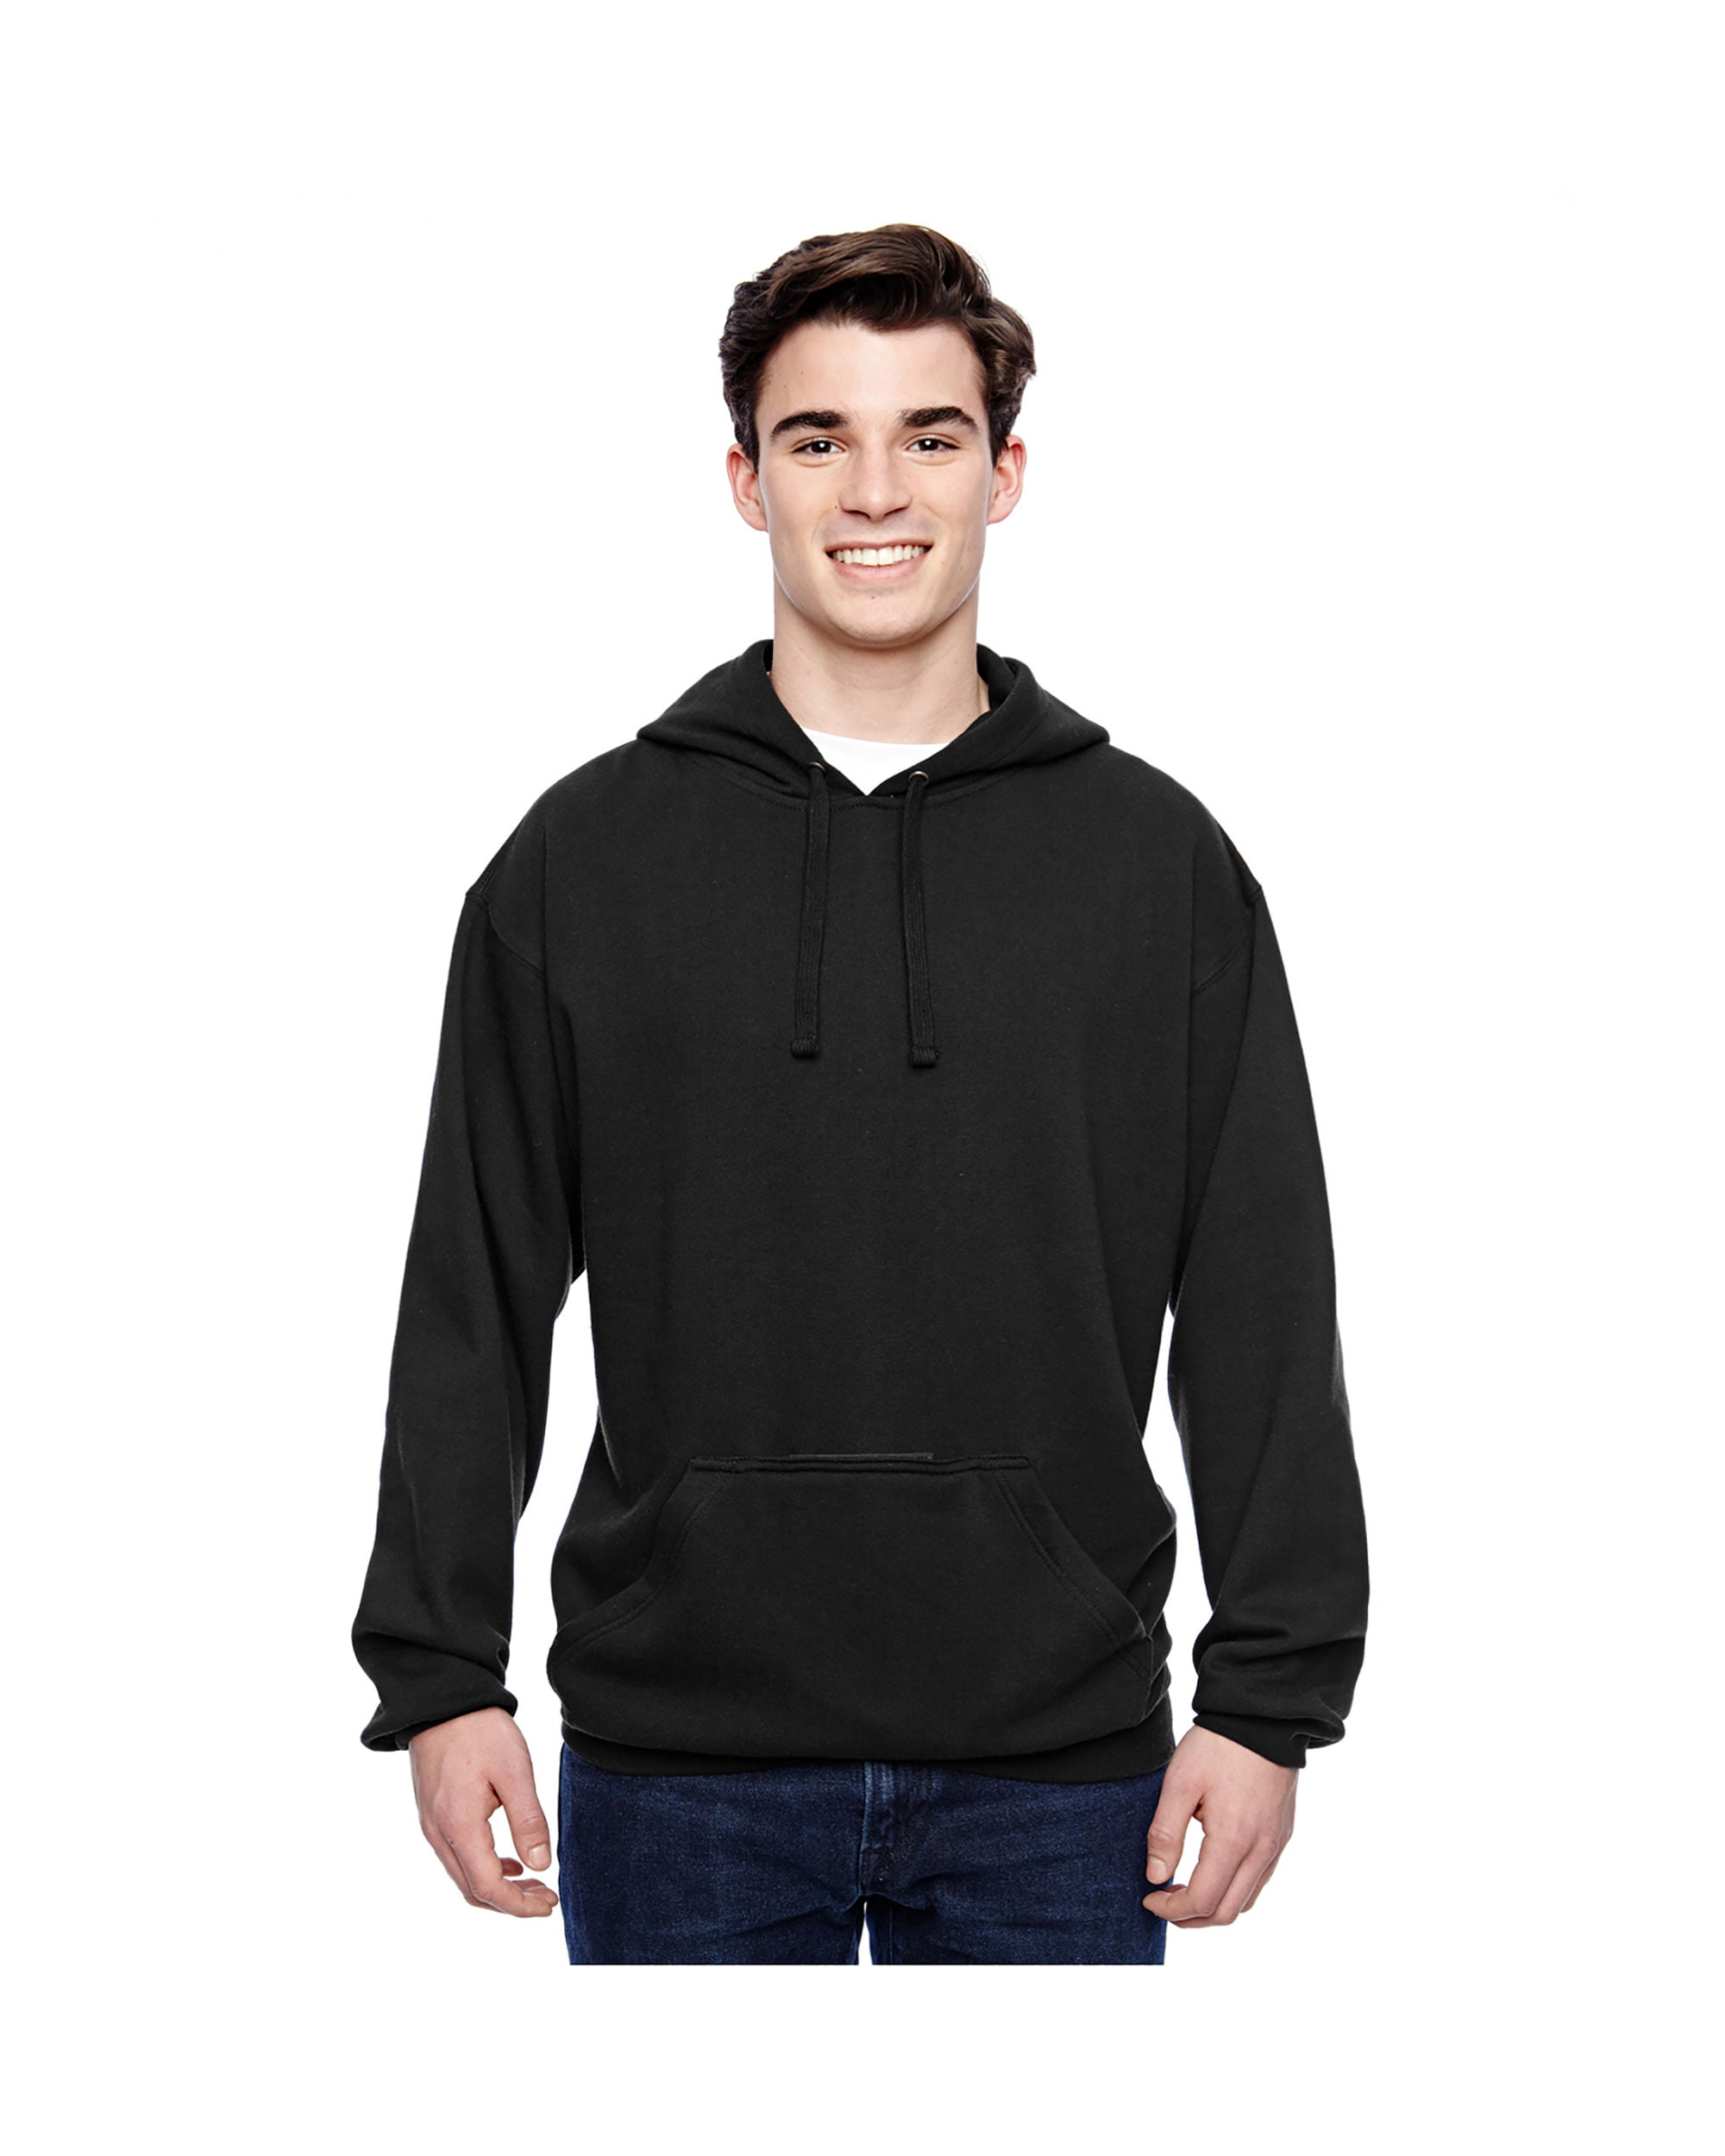 SNOWSONG Mens Lightweight Jersey Full Zip Up Hoodie Jacket Gradient Hooded Sweatshirt with Pocket